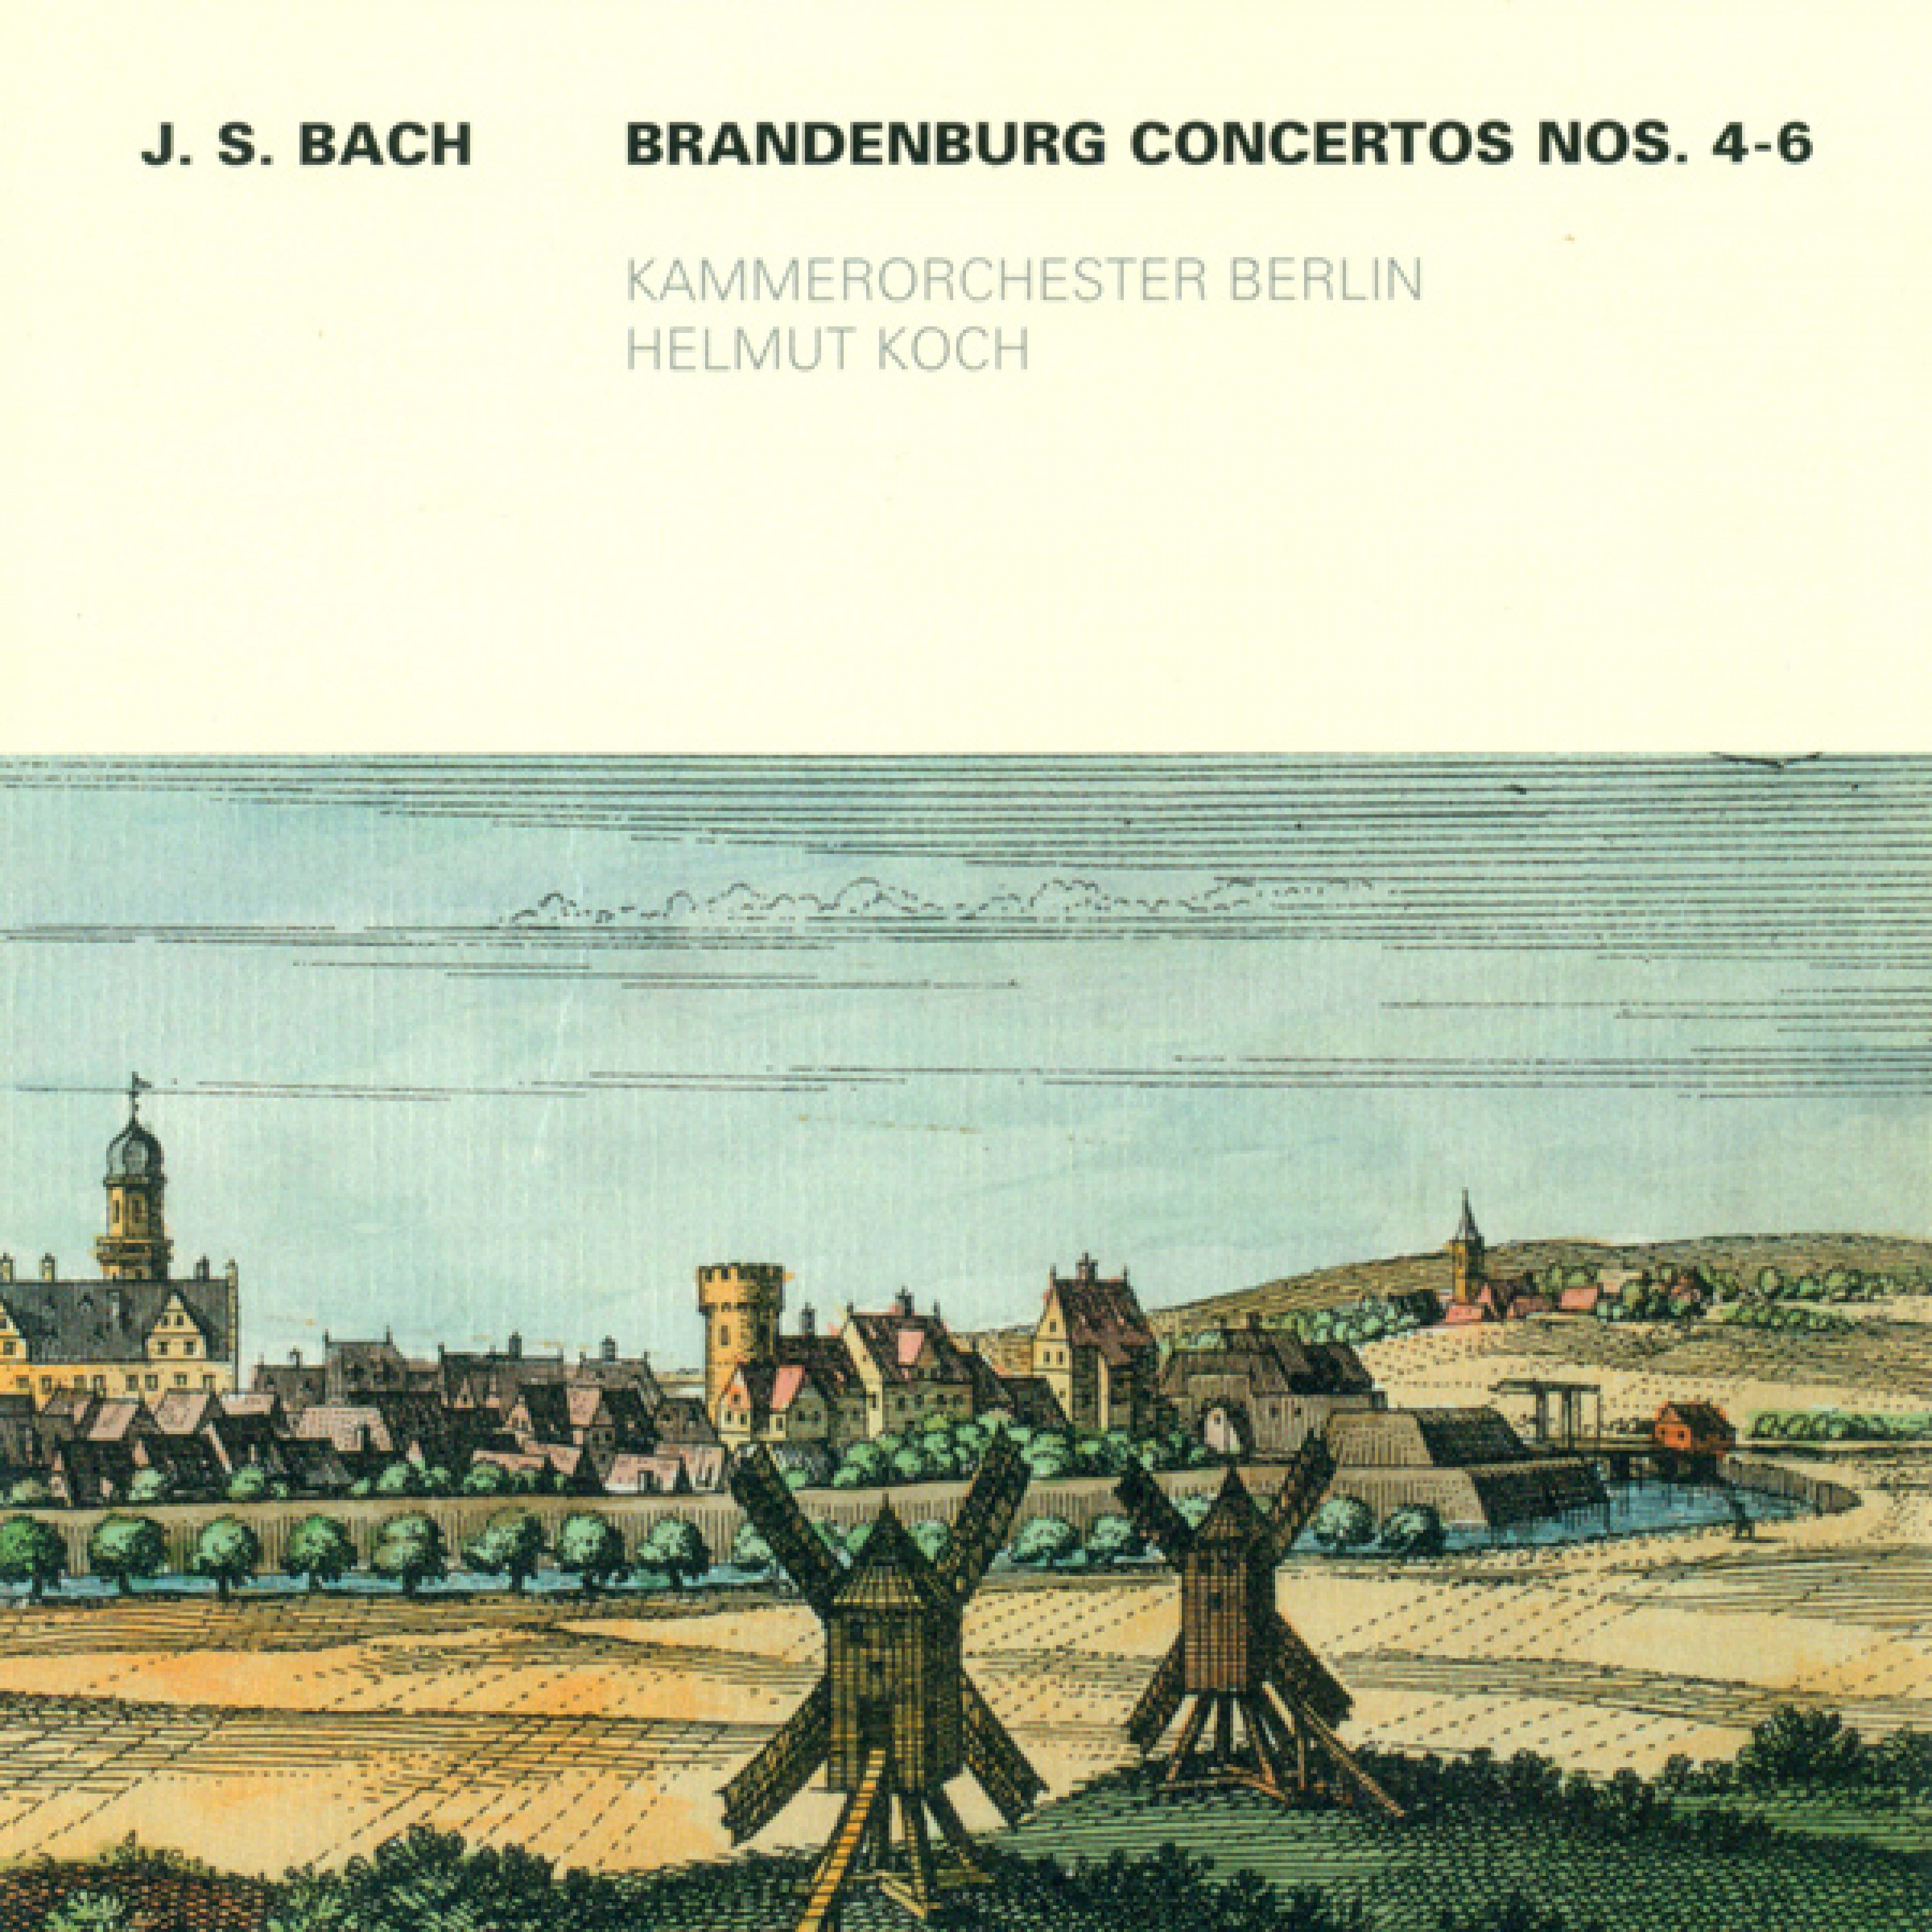 BACH, J.S.: Brandenburg Concertos Nos. 4-6 (Berlin Chamber Orchestra, Koch)